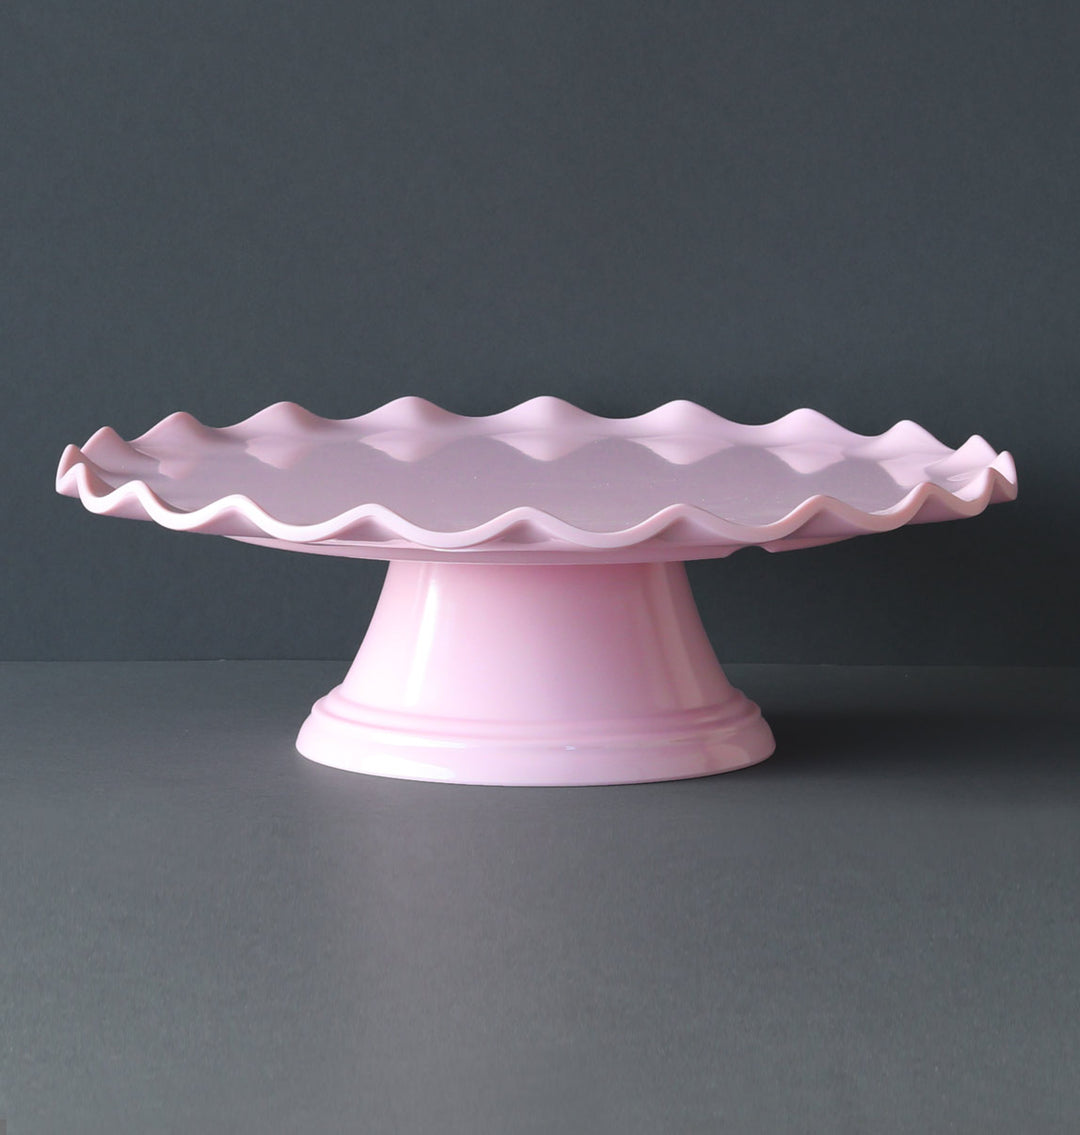 Wave Rim Pink Cake Stand